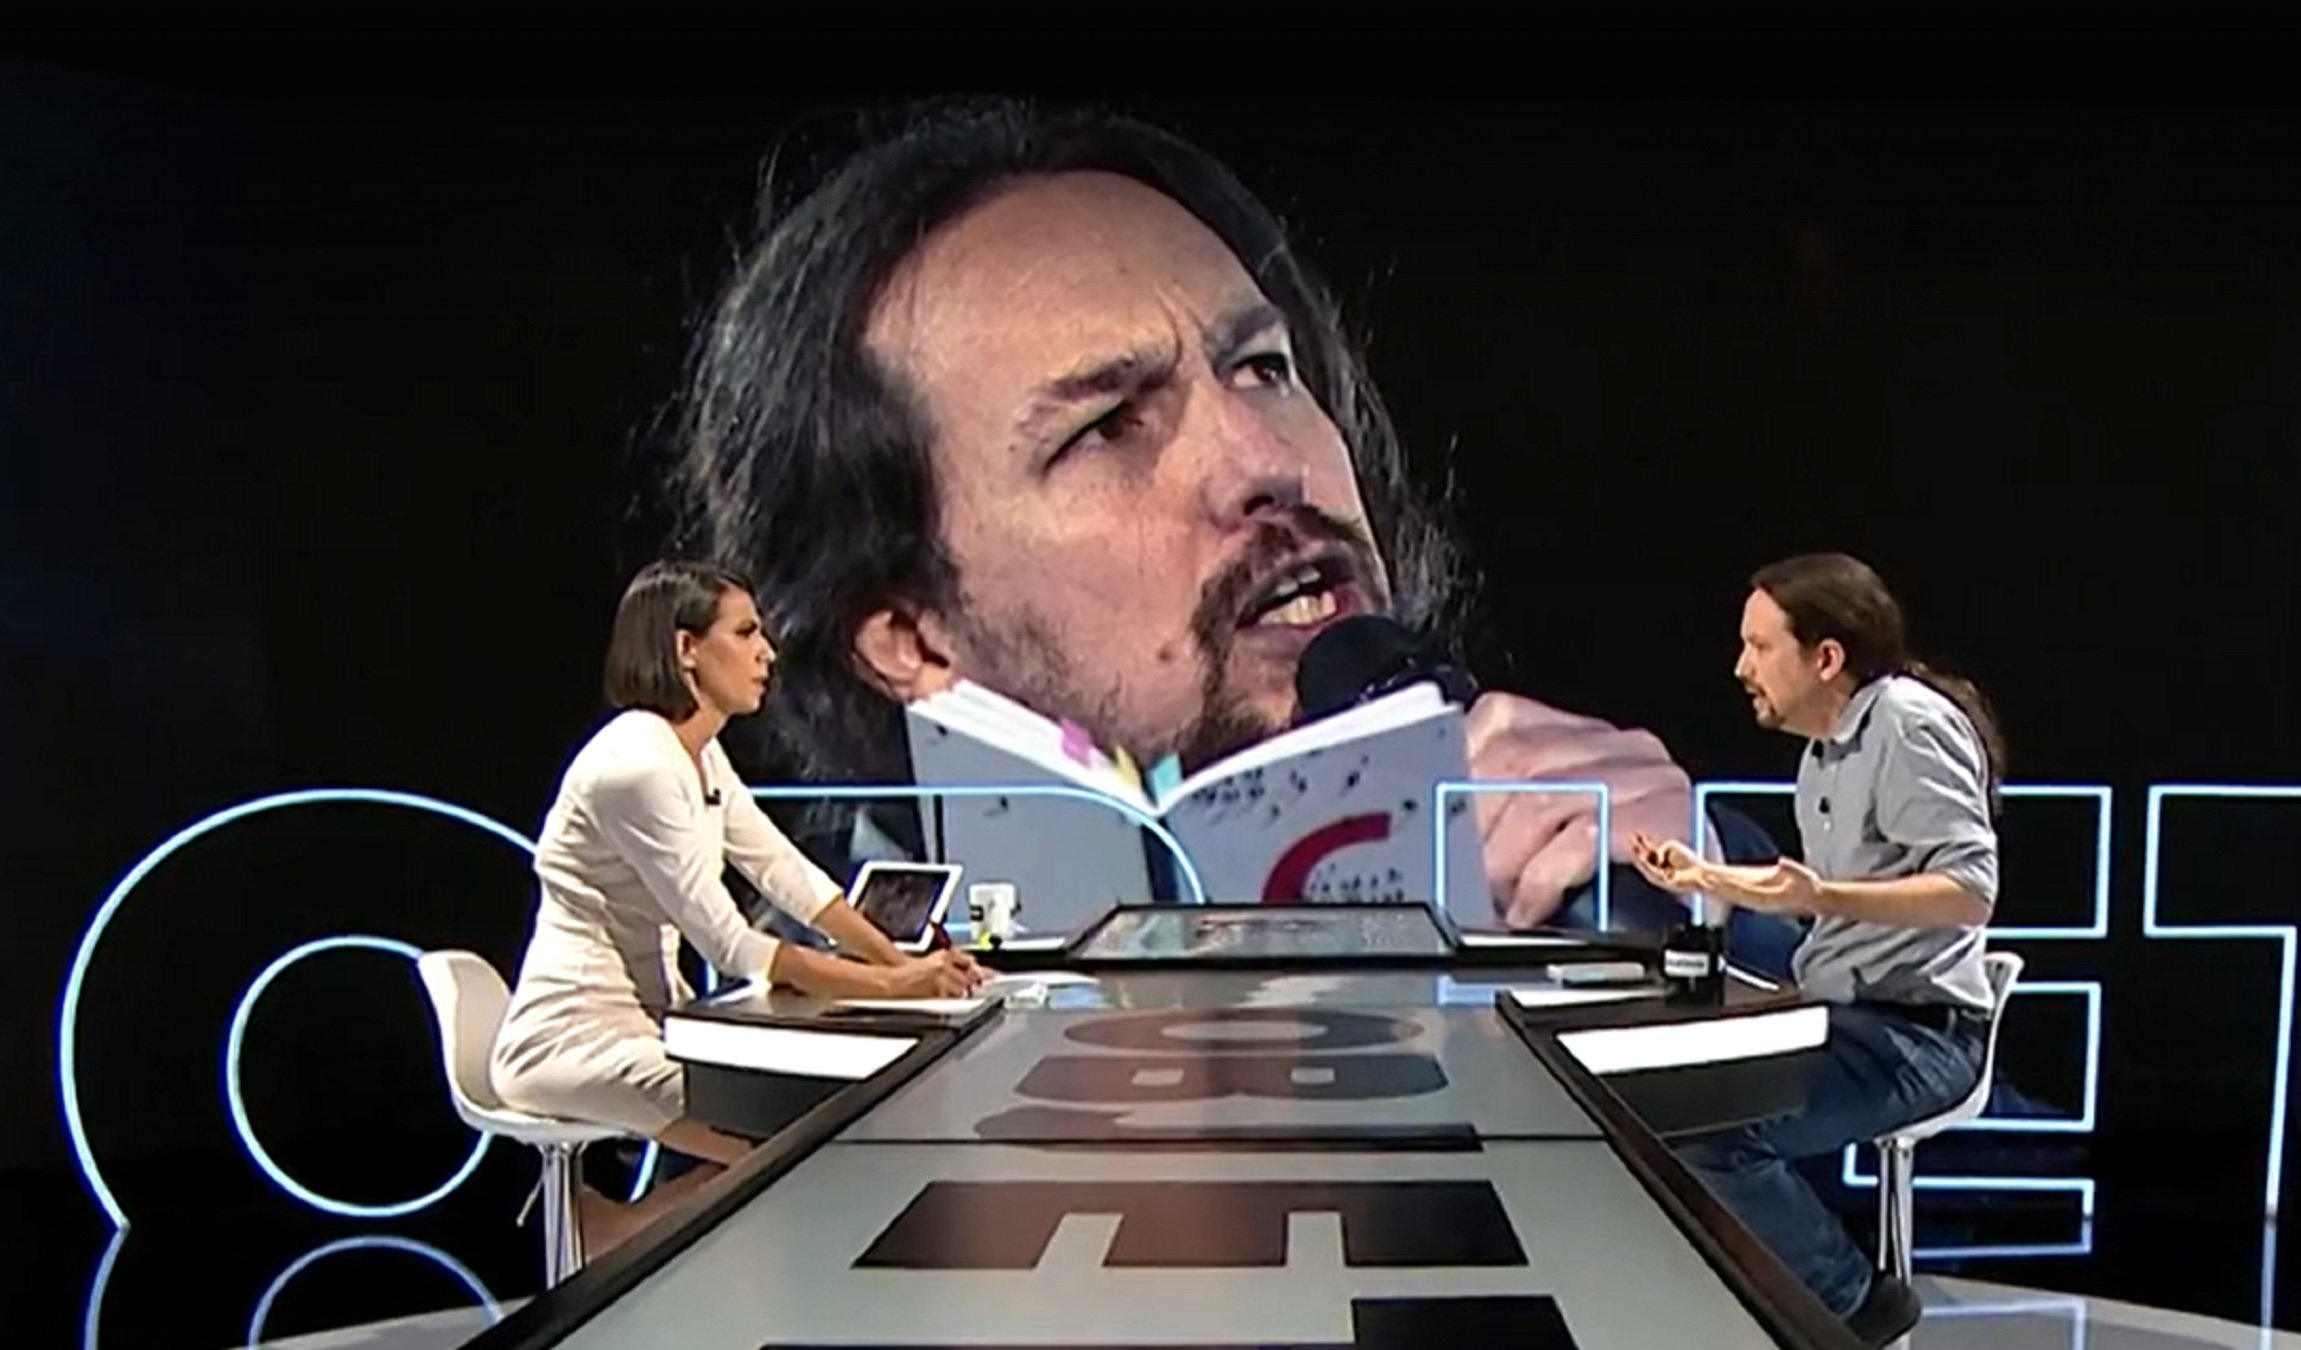 Pablo Iglesias molt dur contra Ana Pastor: "Métetela donde te quepa"